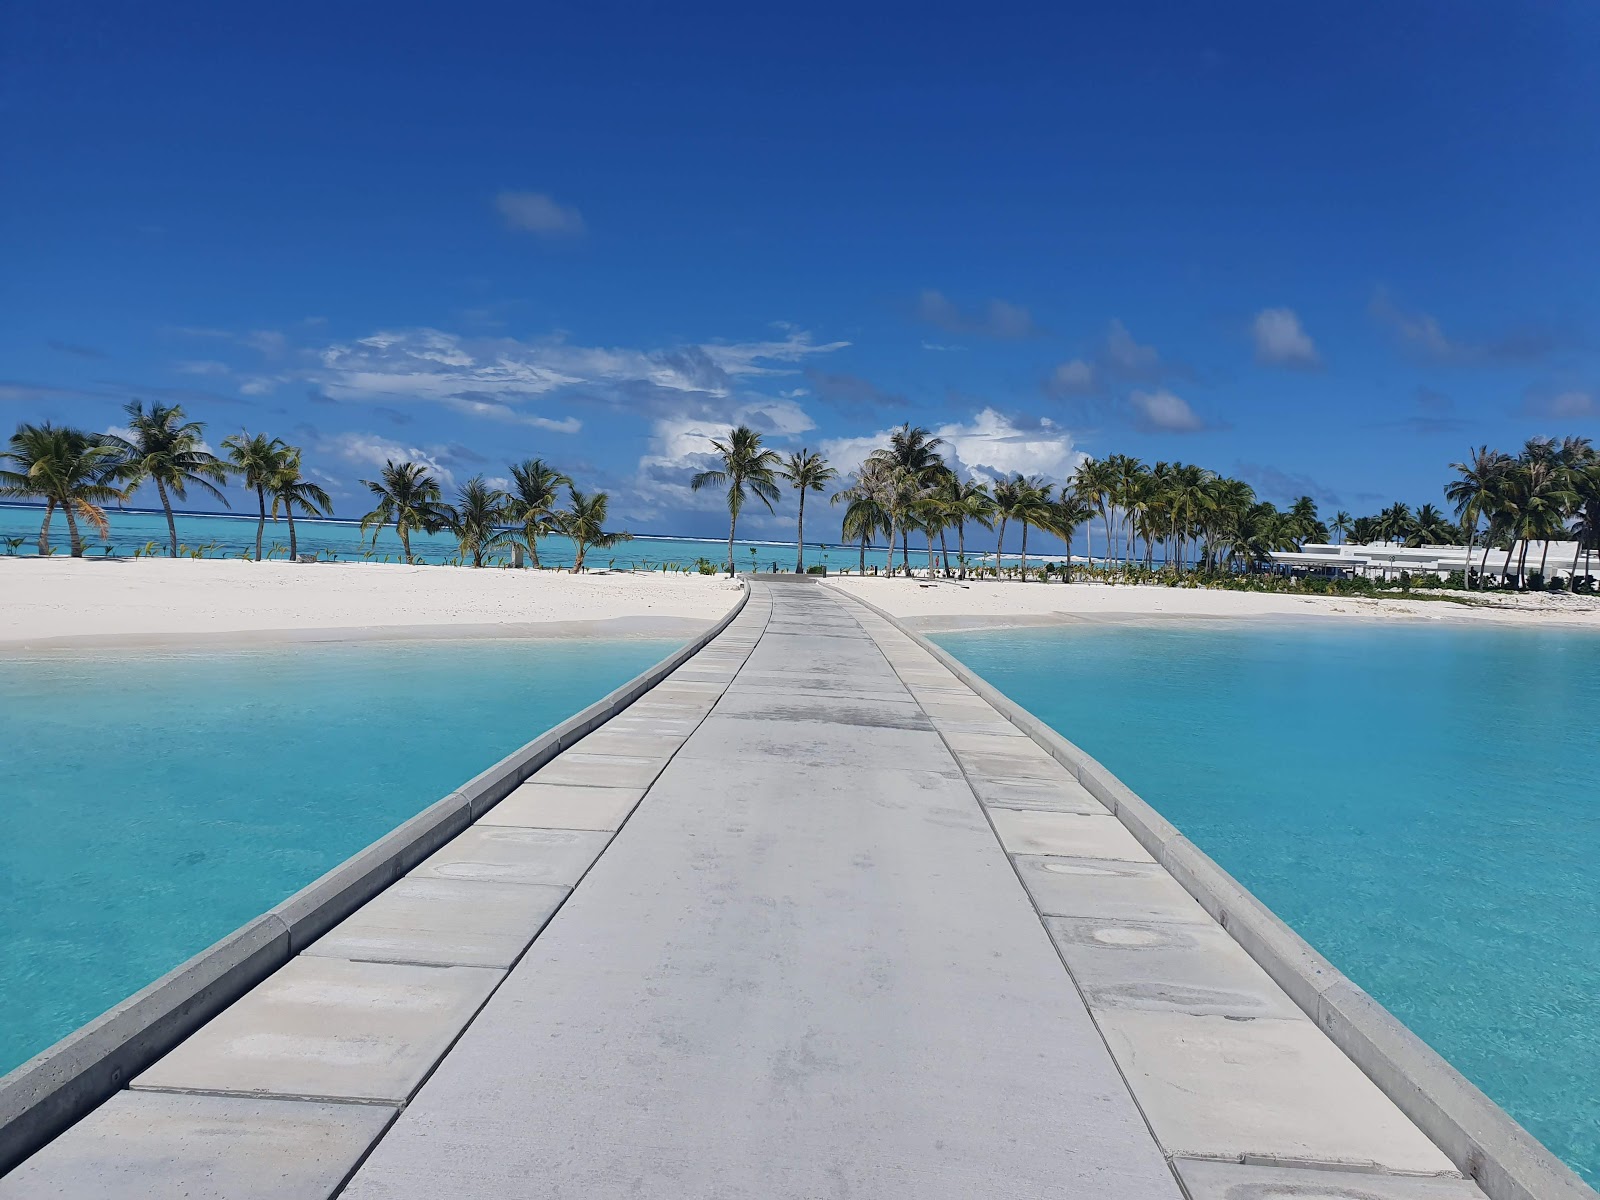 Photo of Riu Resort Beach - popular place among relax connoisseurs